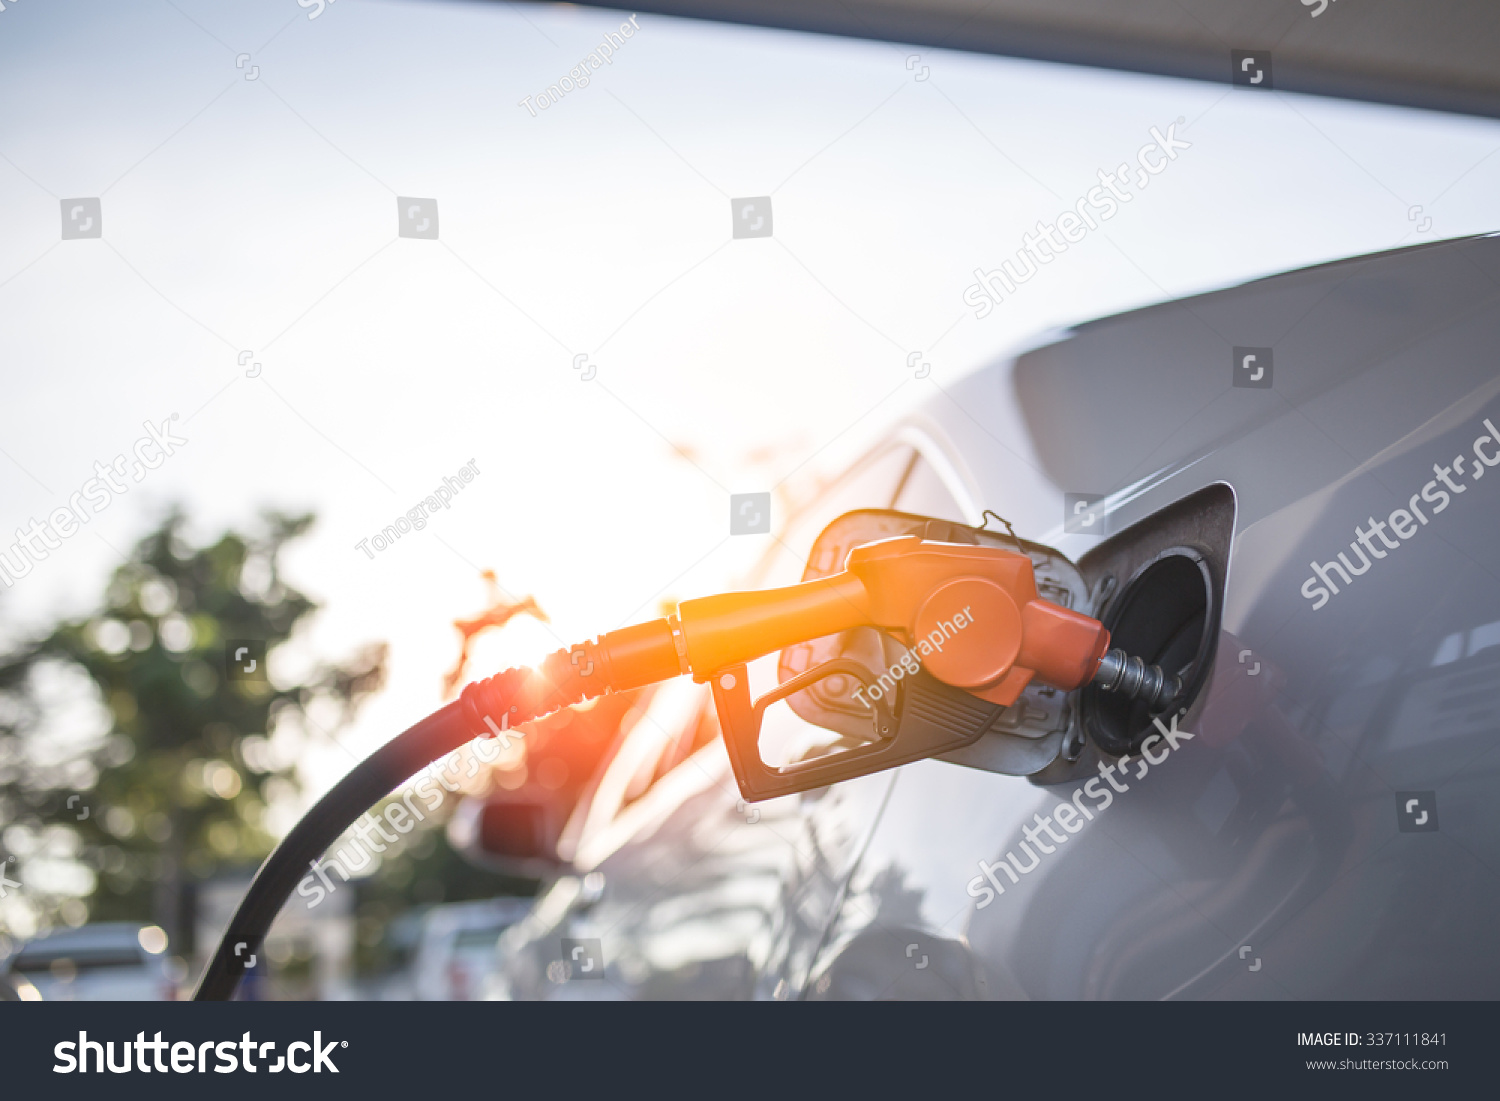 Car refueling on a petrol station. #337111841